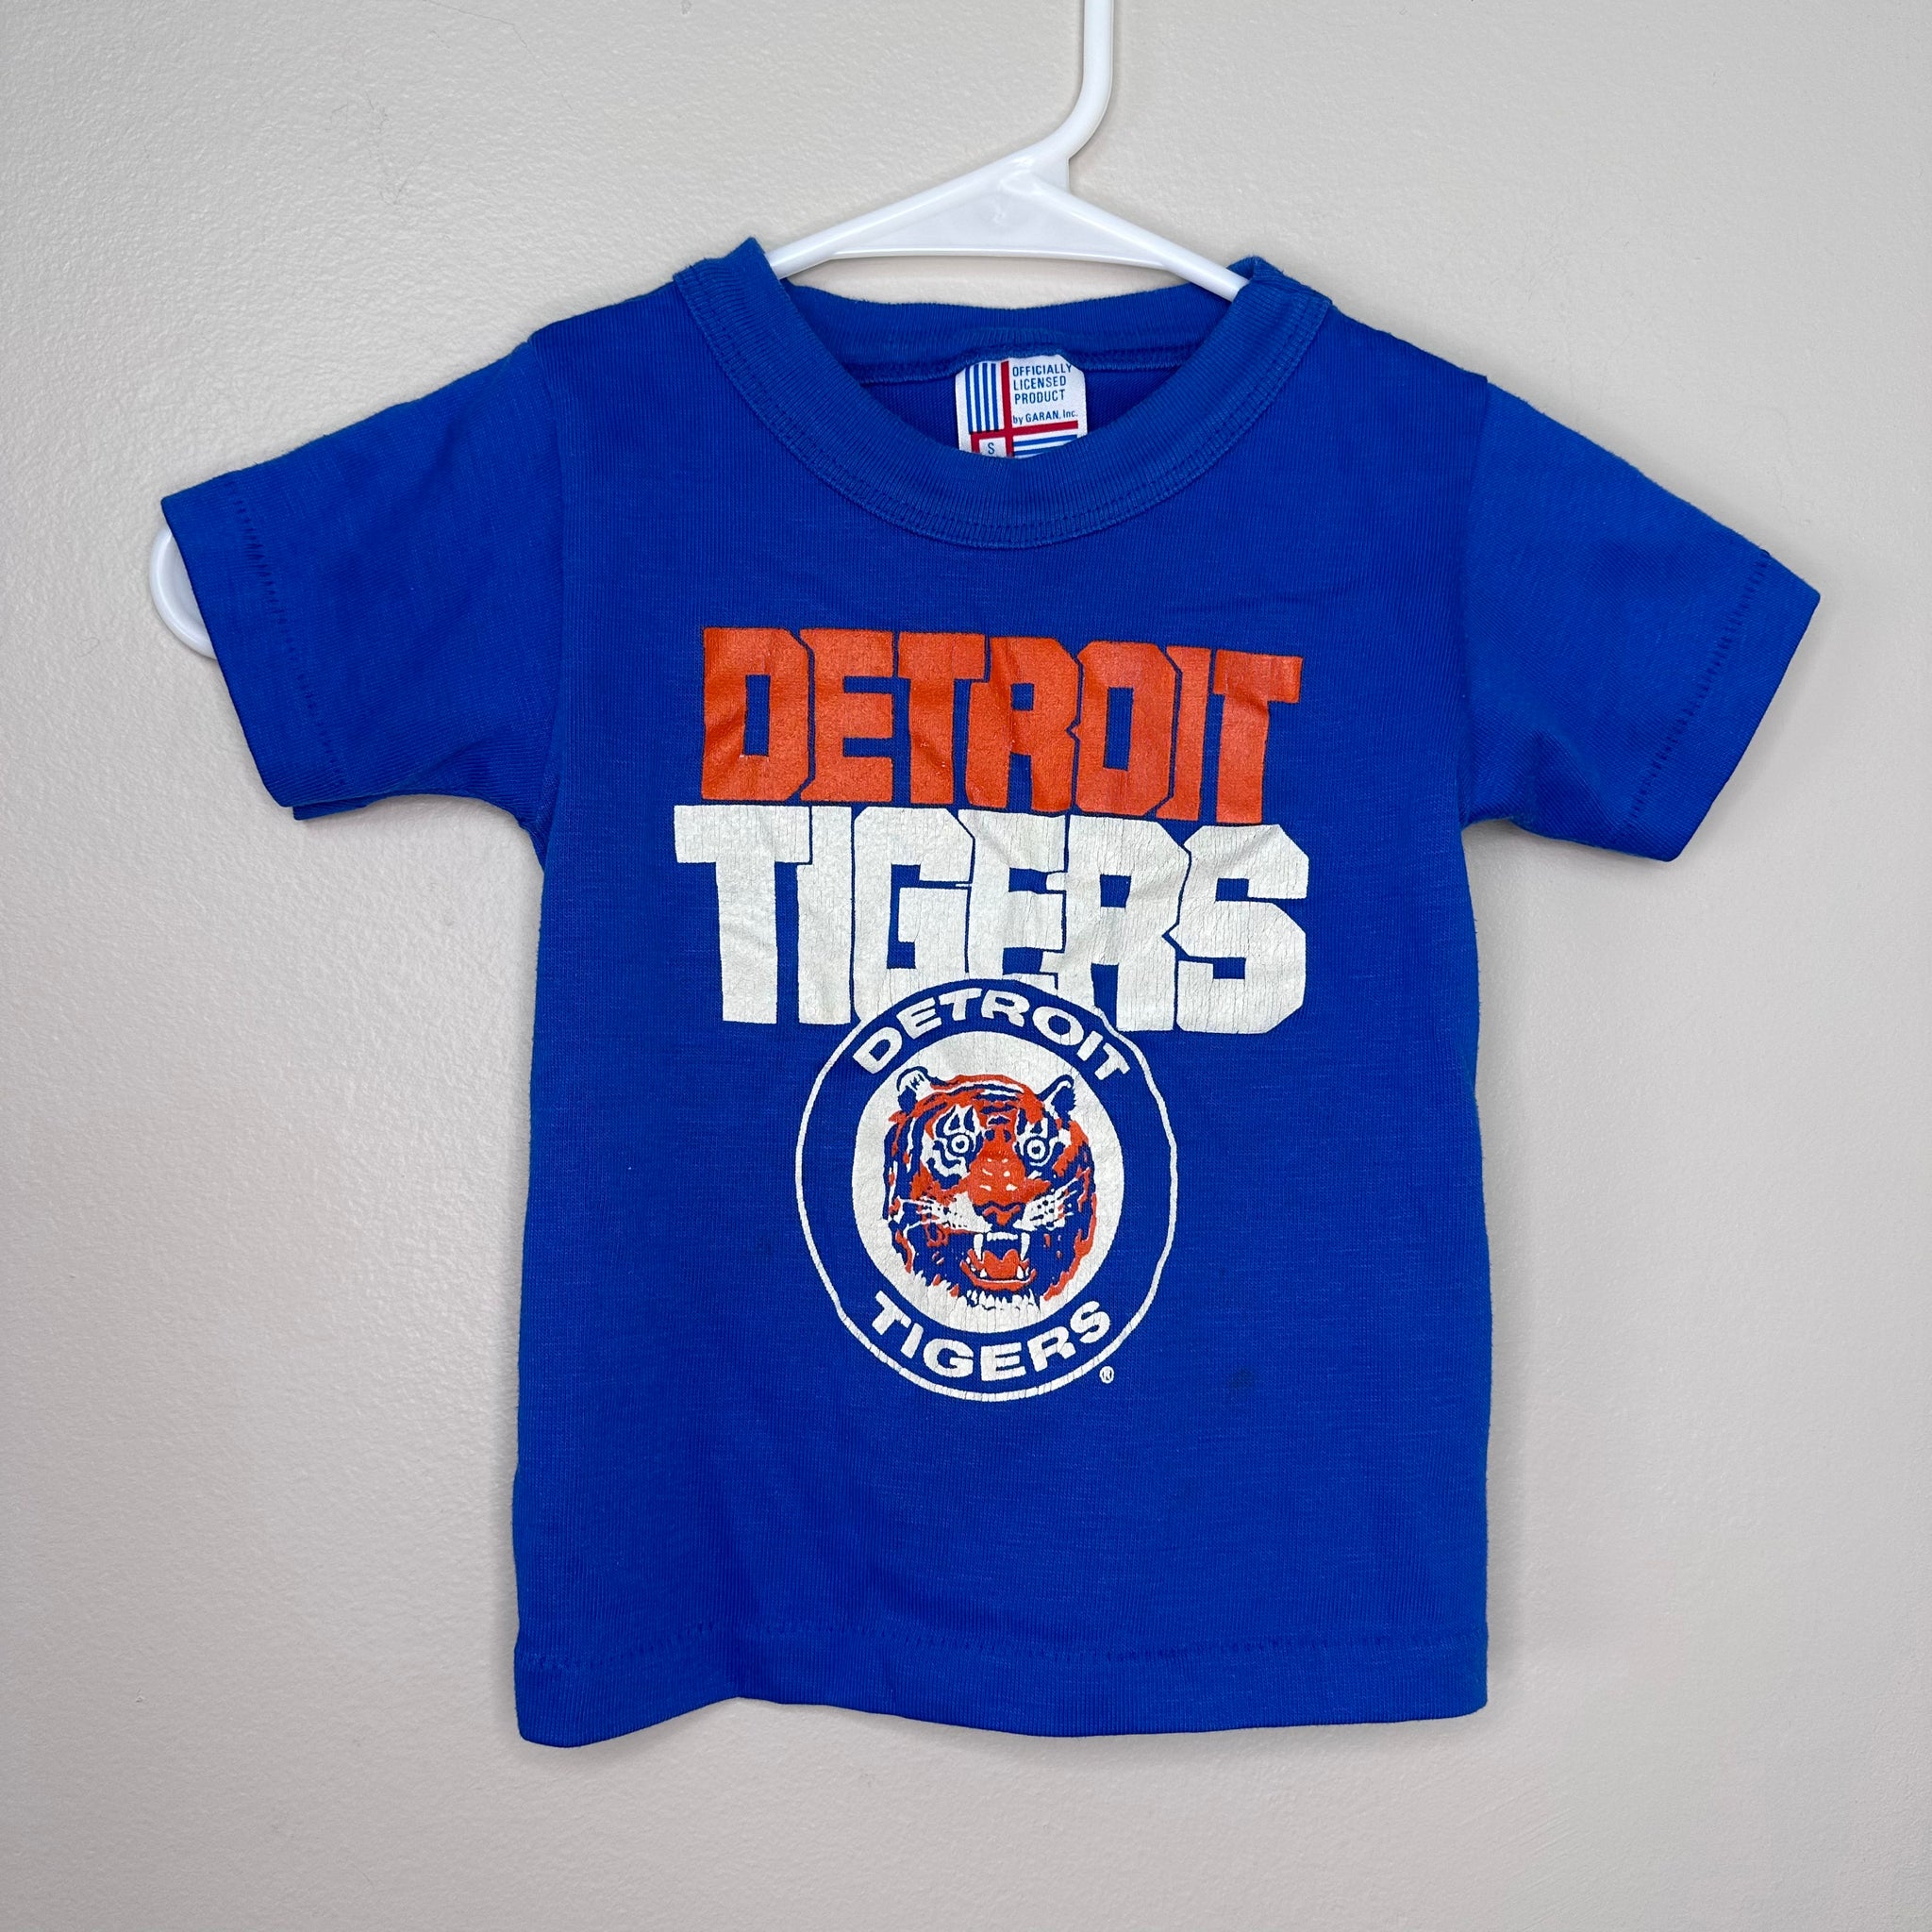 Detroit Tigers' Kids' T-Shirt